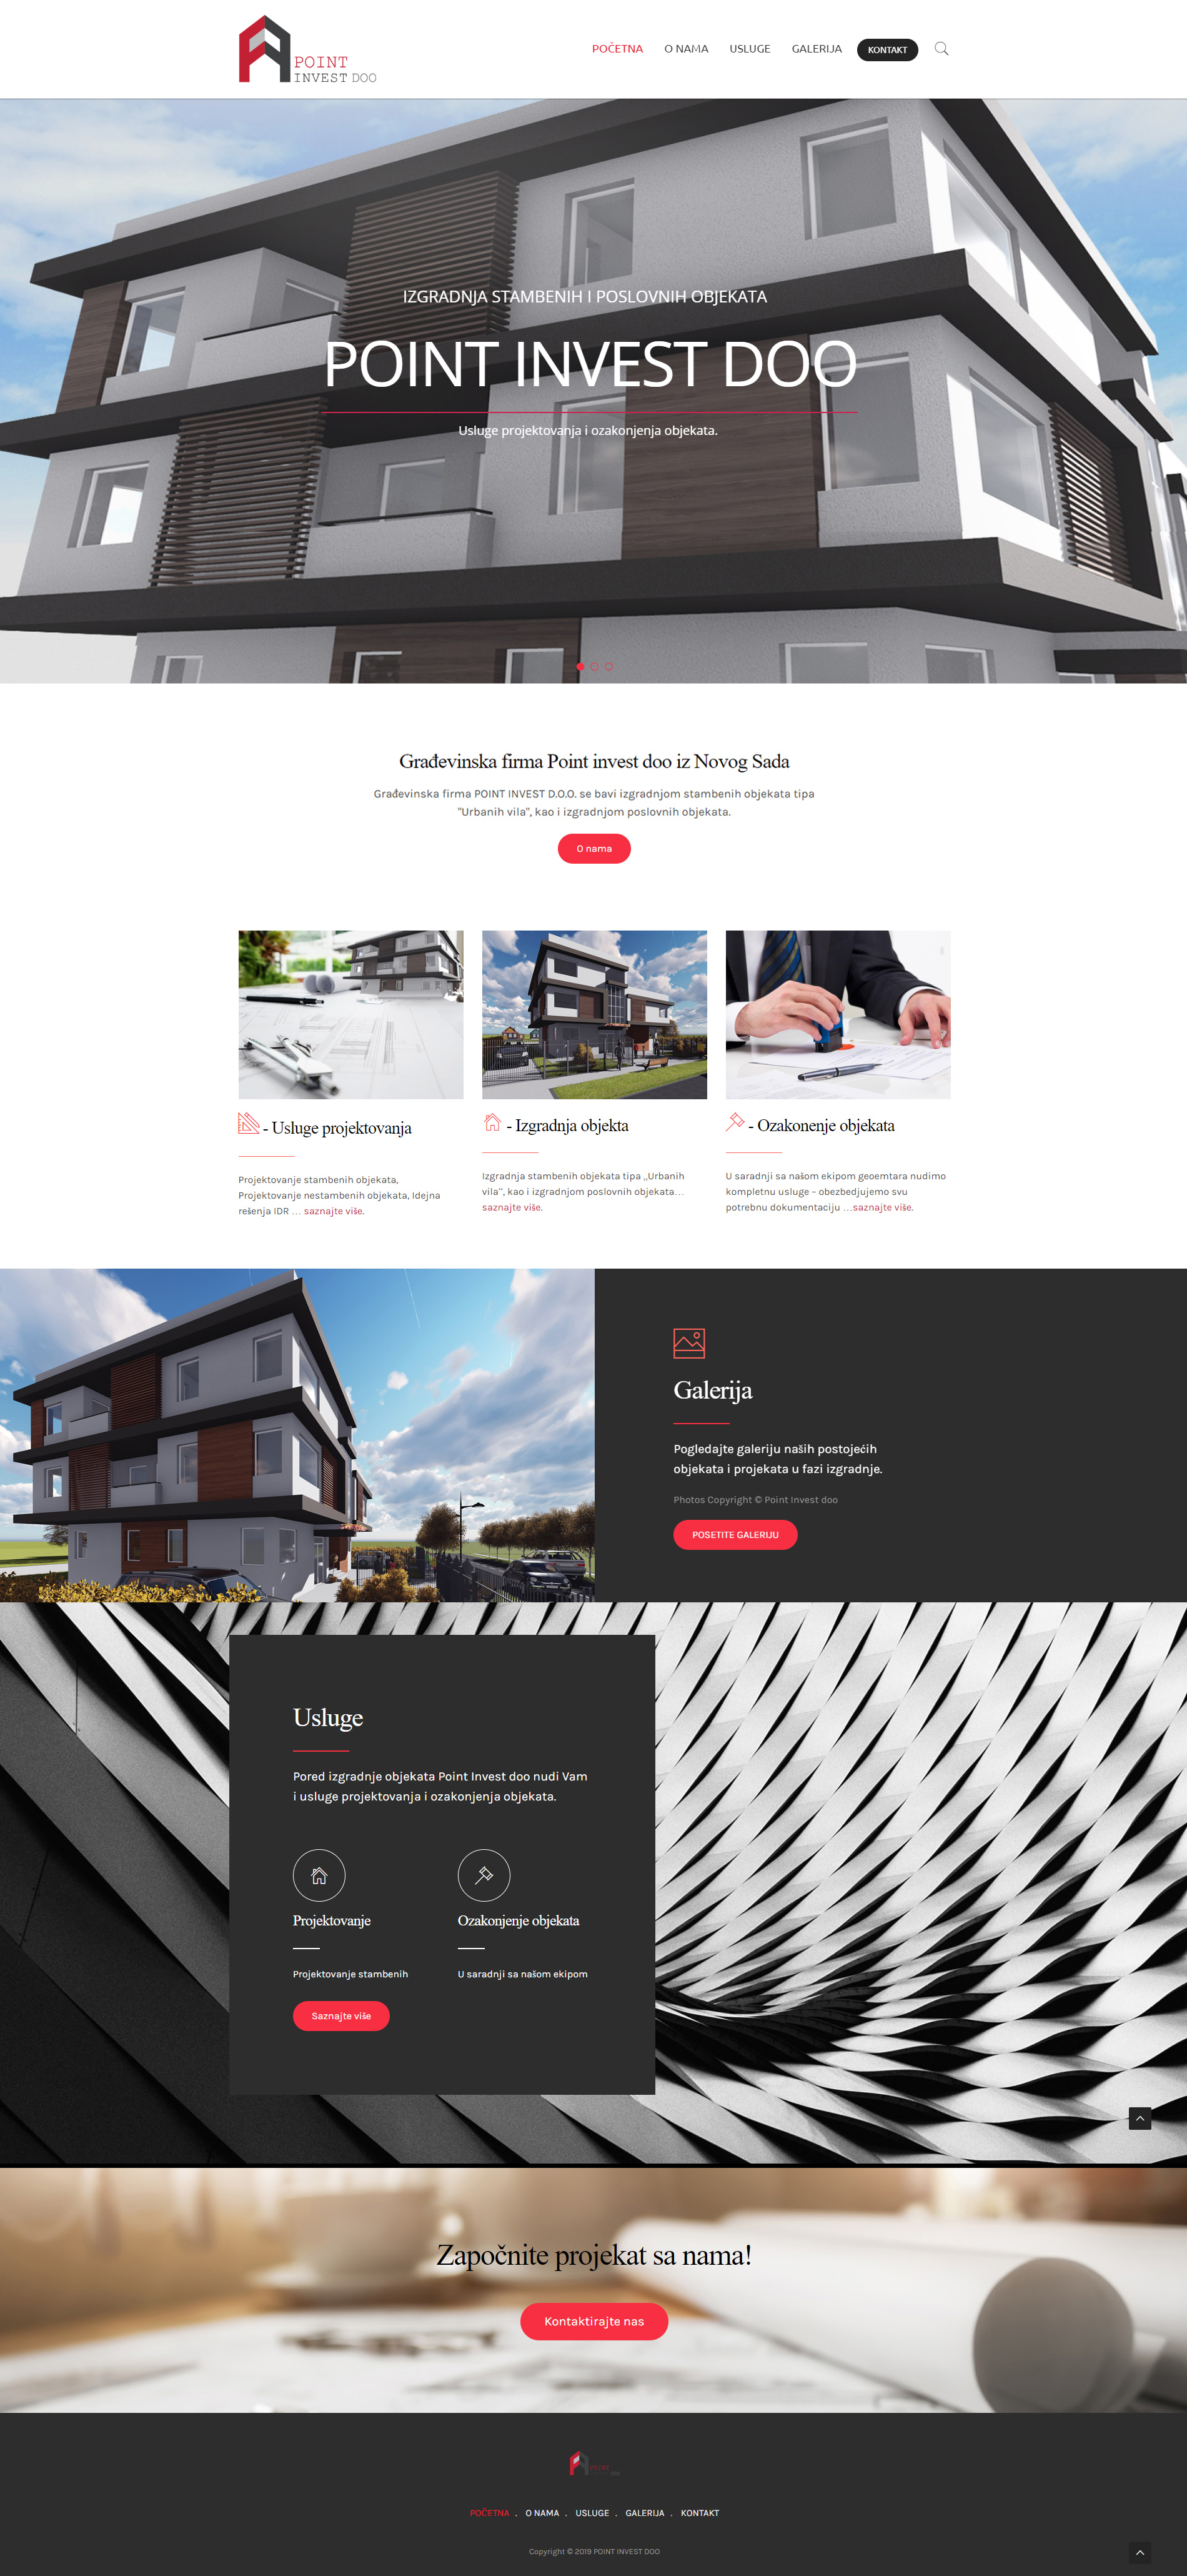 Web design - Home page